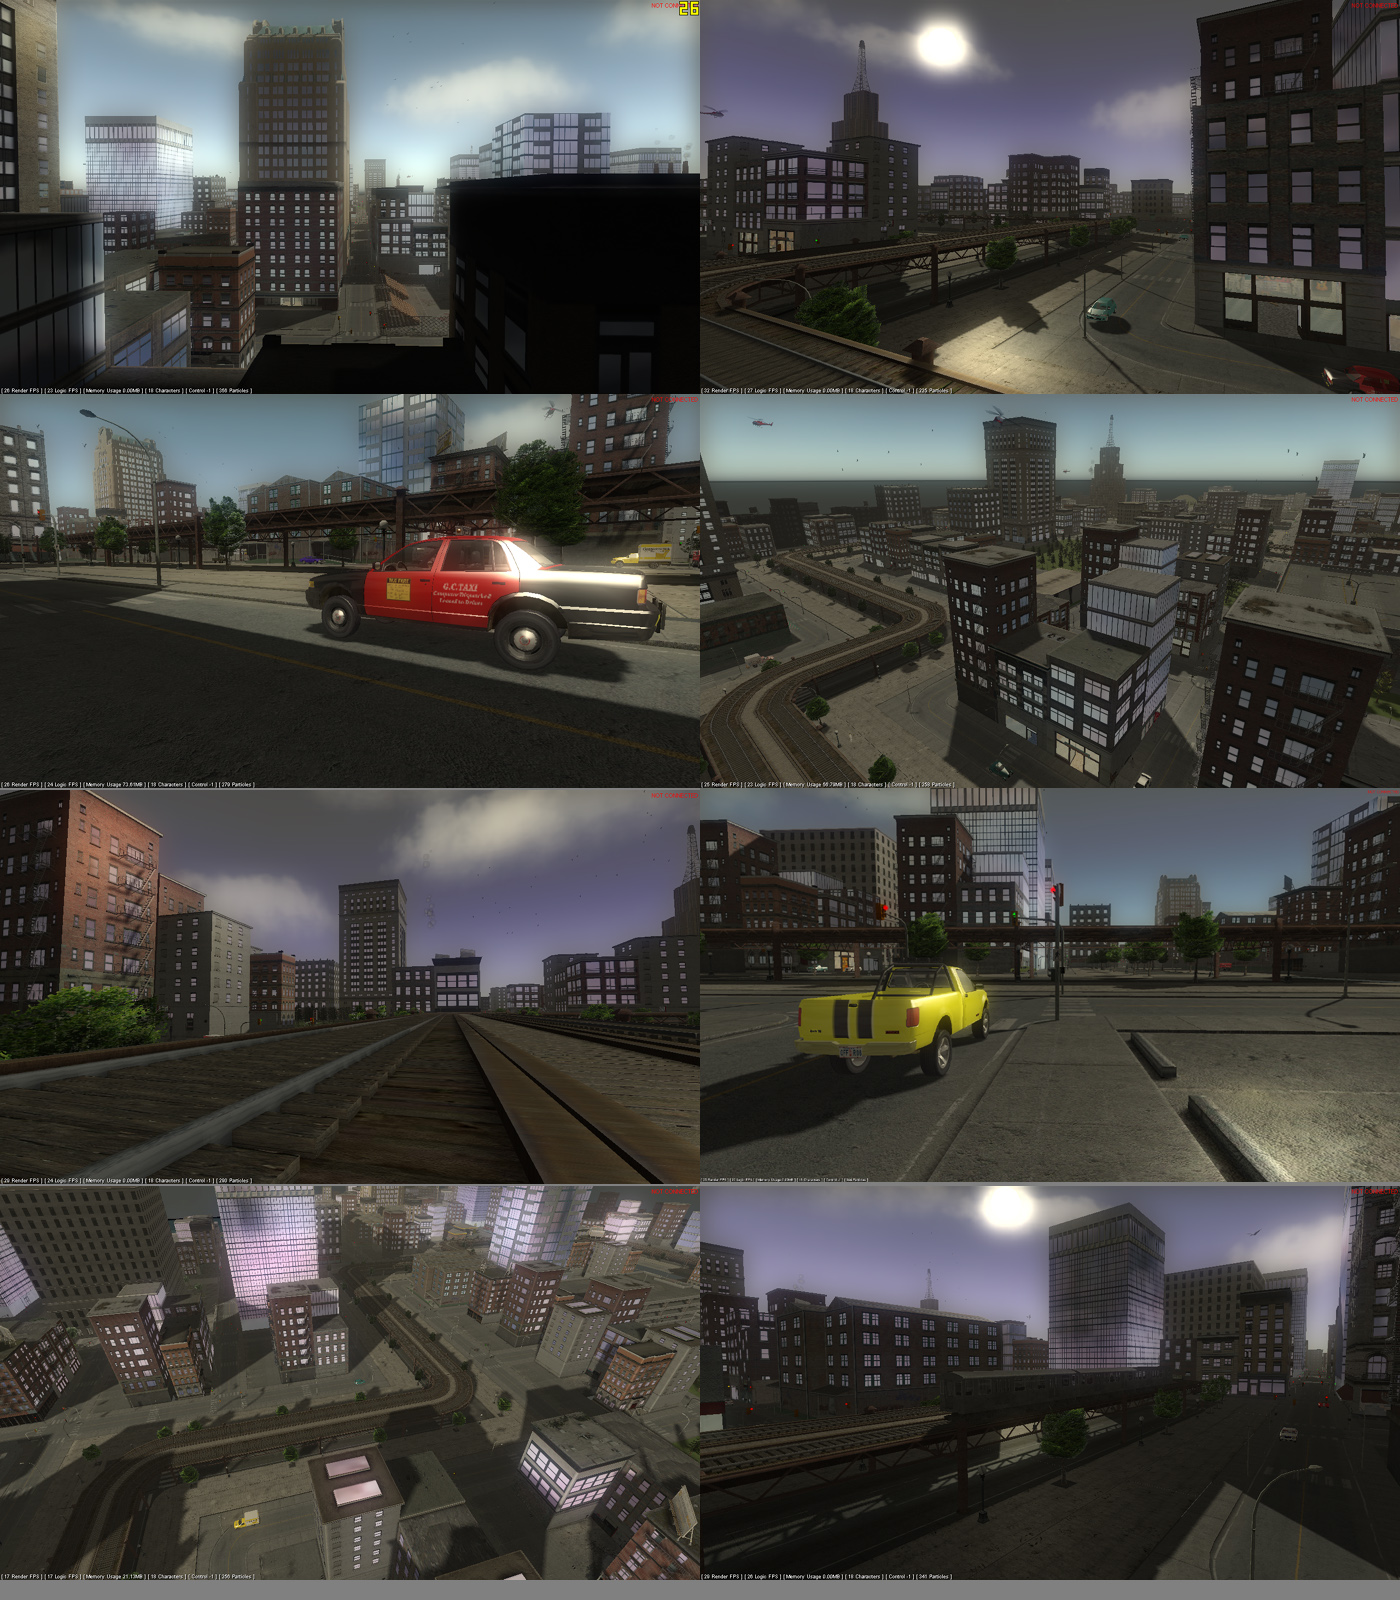 Some Urban Empires Environment pics & Next game....